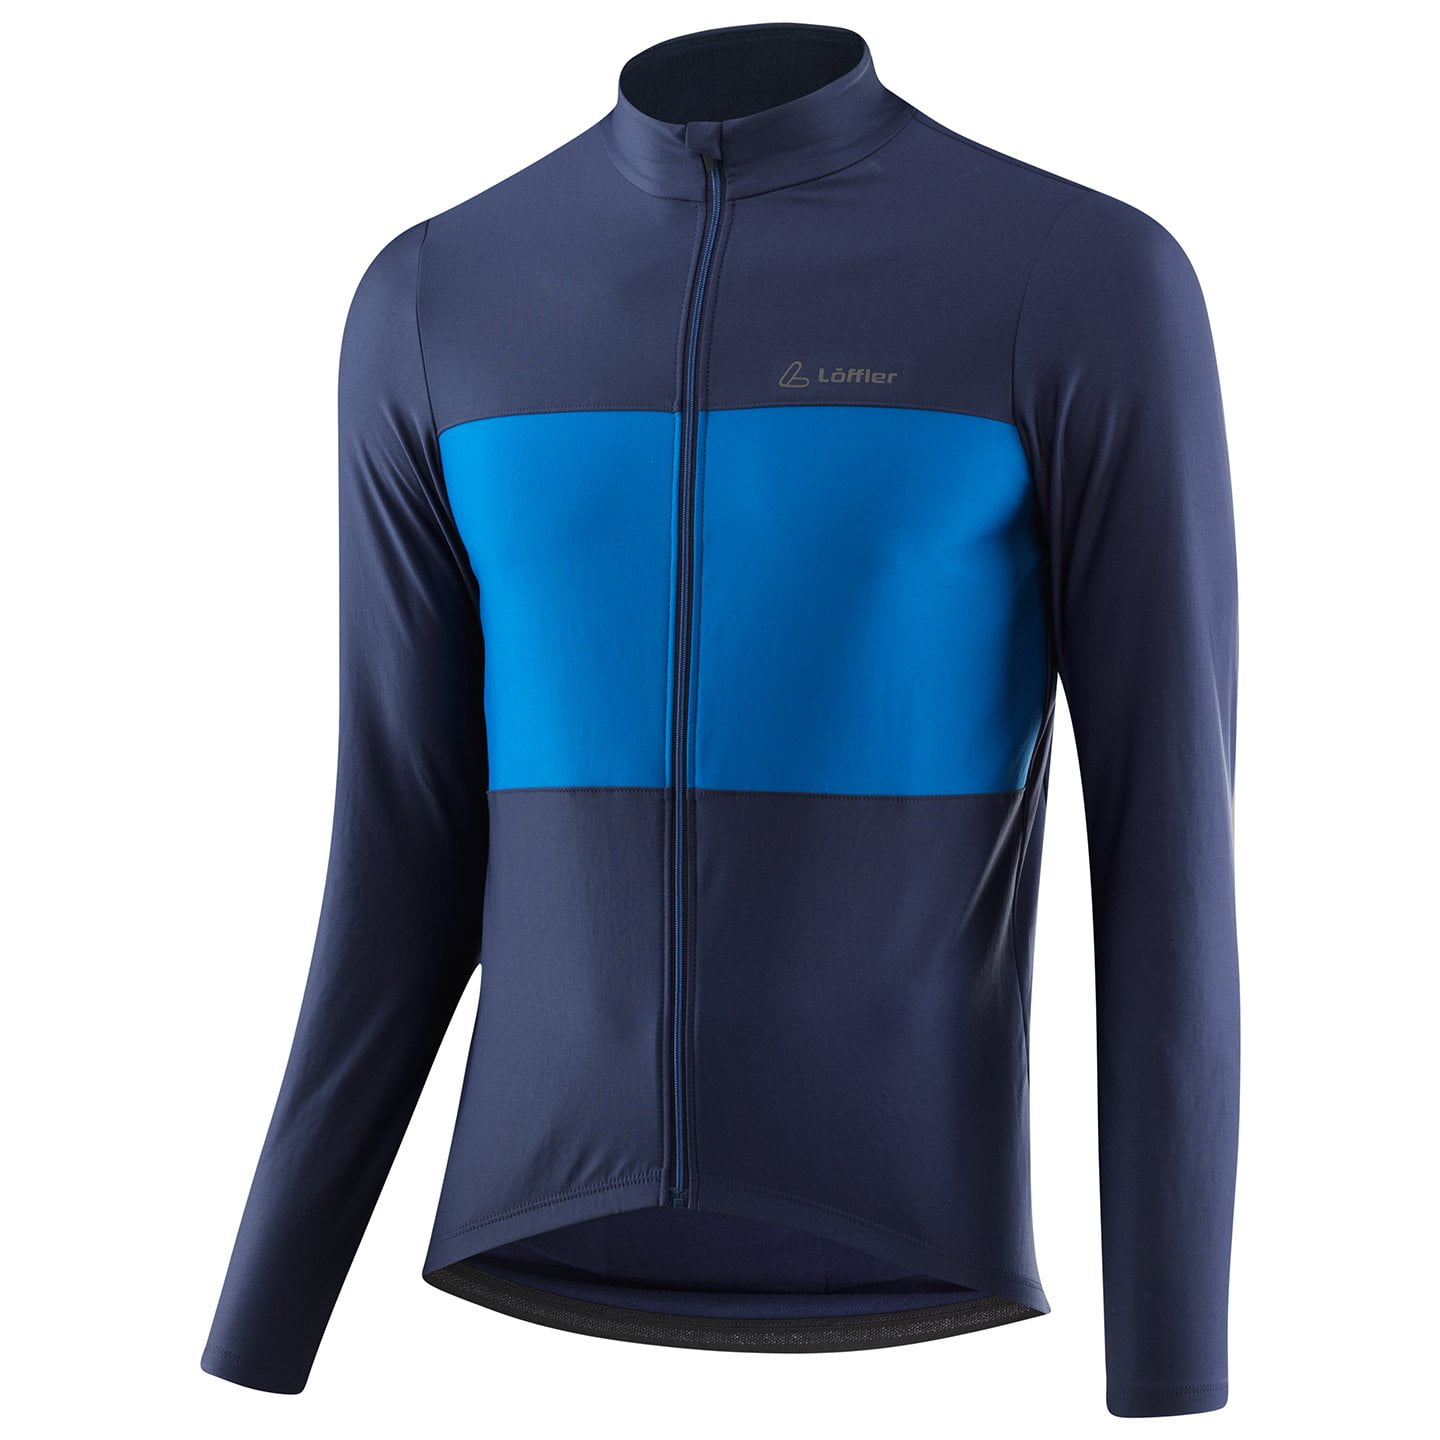 LOFFLER Uni CB Long Sleeve Jersey Long Sleeve Jersey, for men, size M, Cycling jersey, Cycling clothing